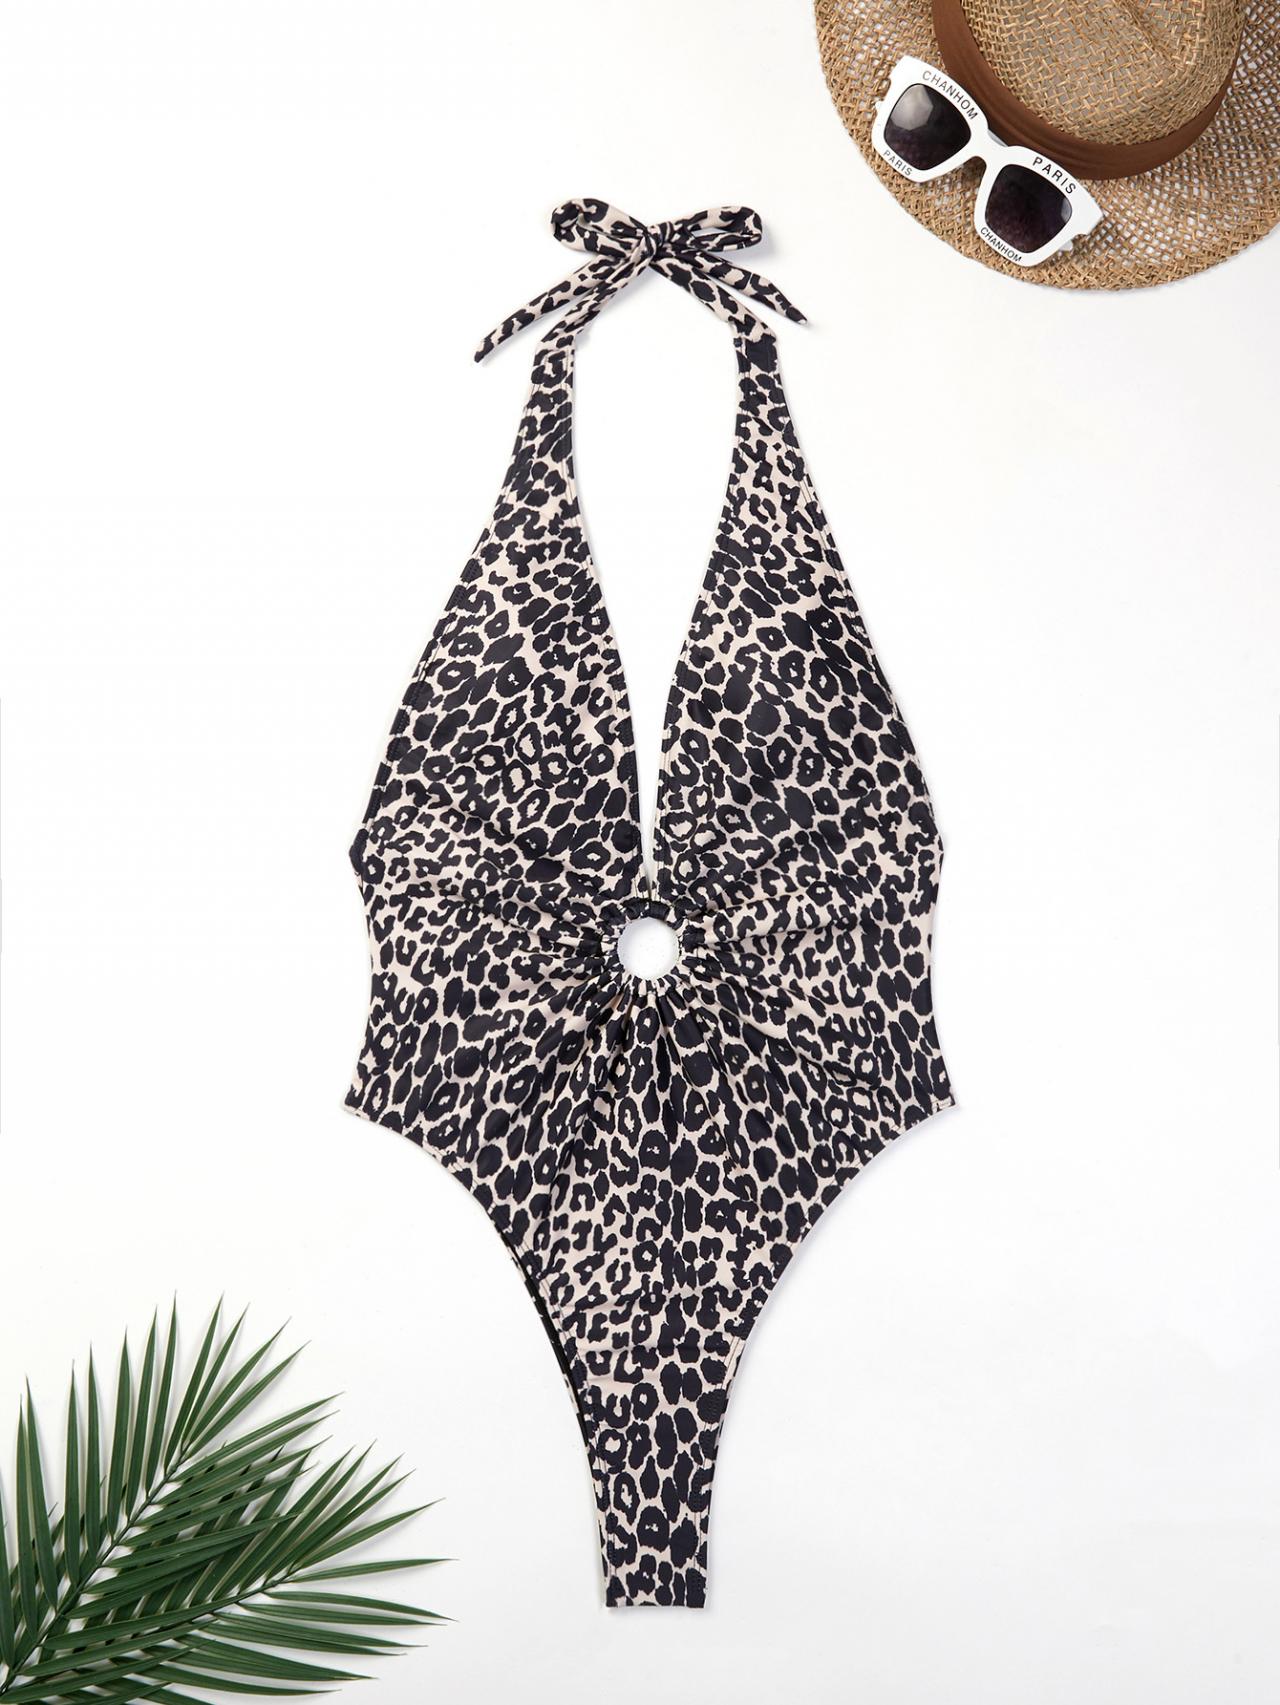 Cute Leopard One Piece Bikini Swimwear Bathsuit Bikini